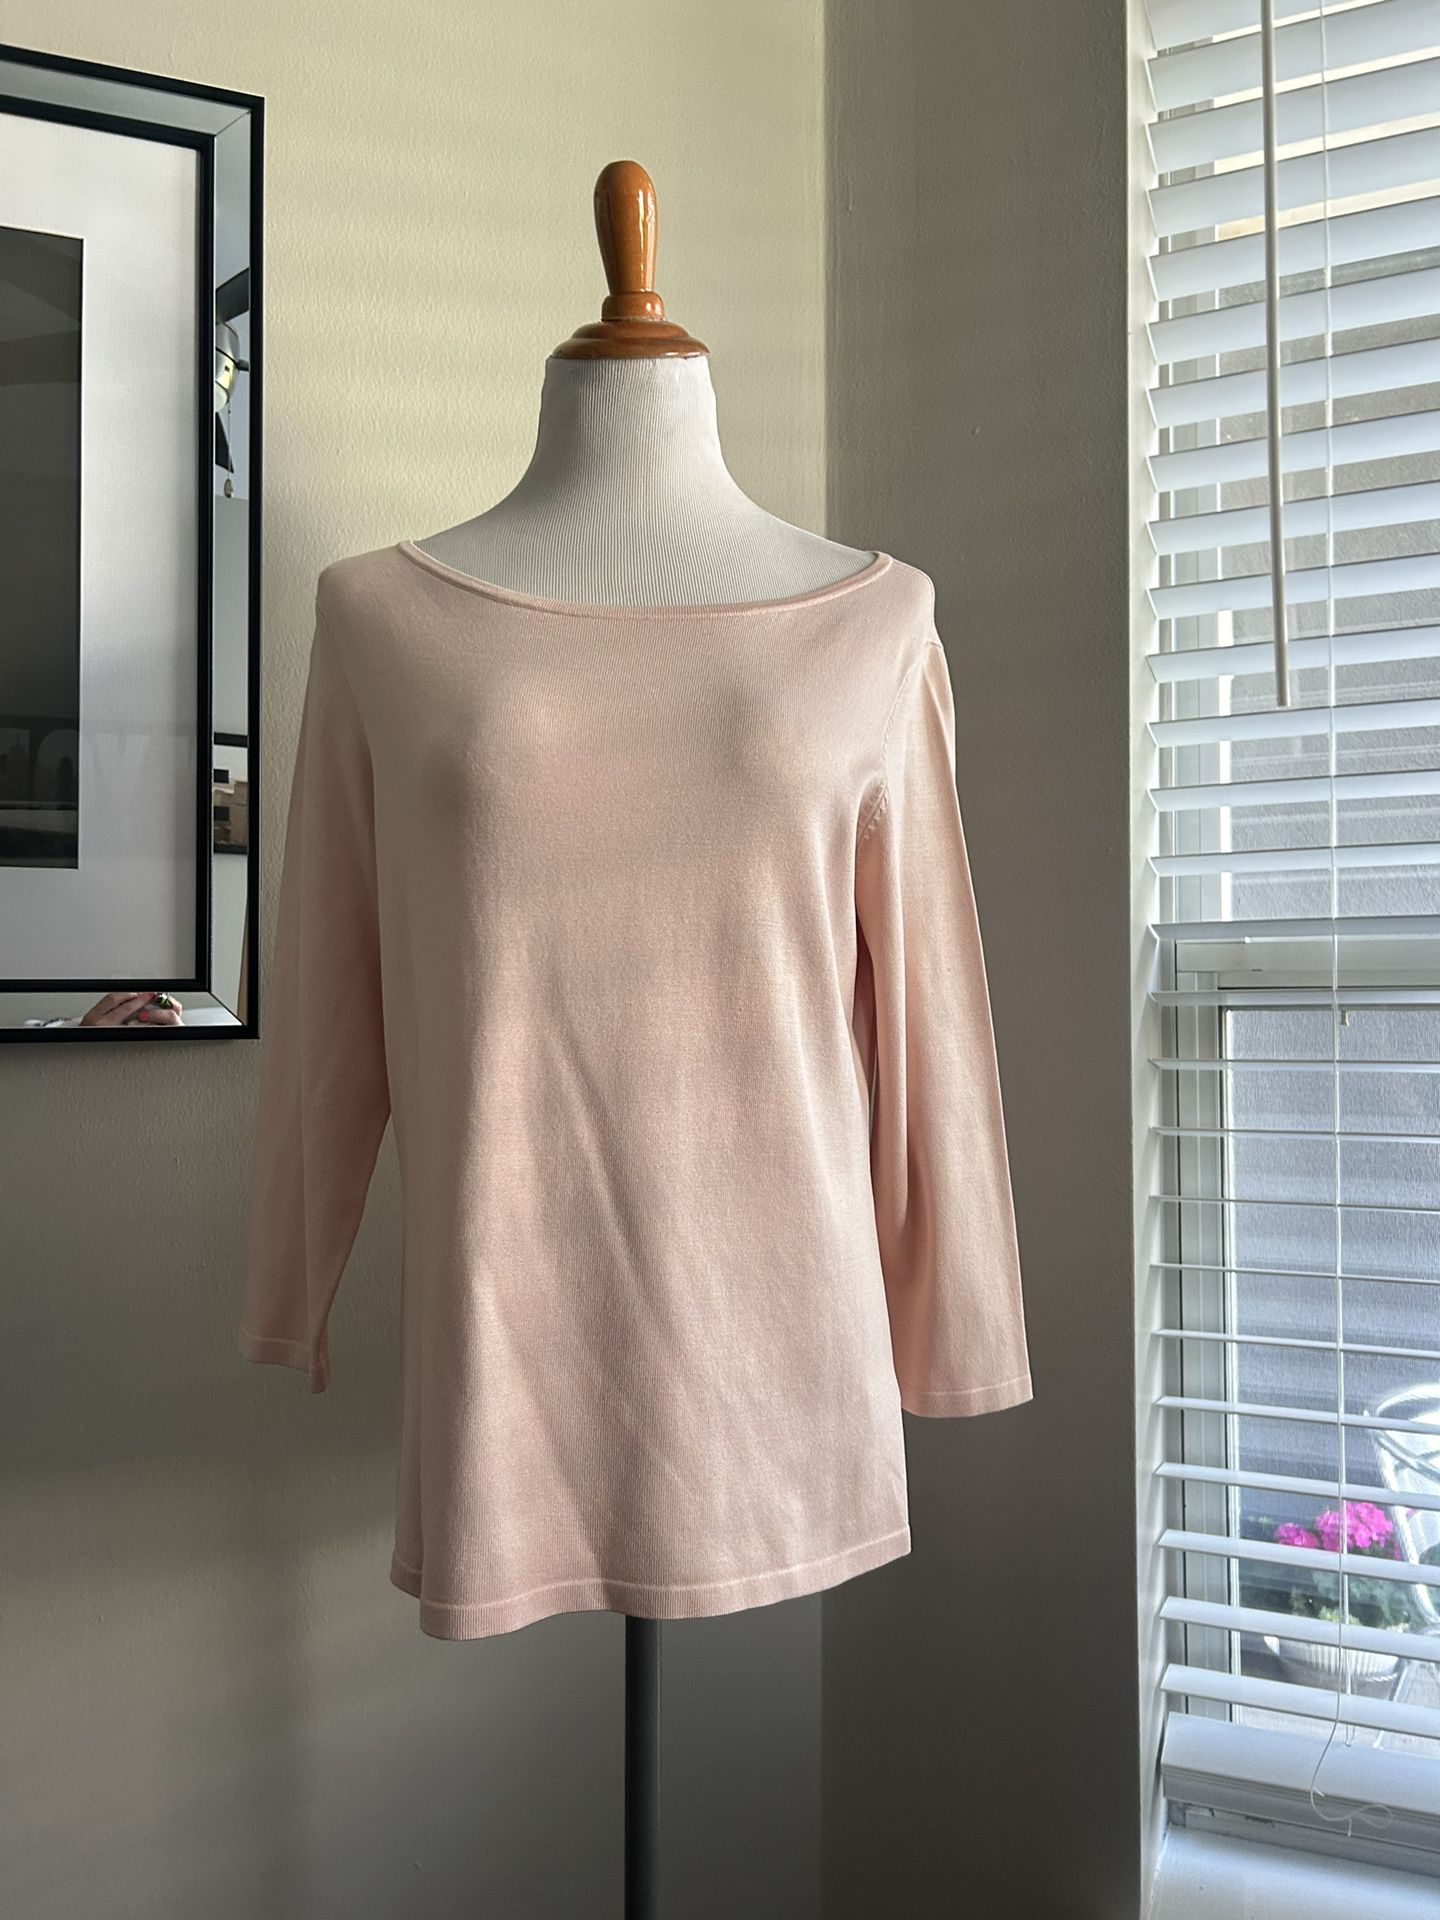 Blush, pink, long sleeve, Ralph Lauren size large women’s blouse